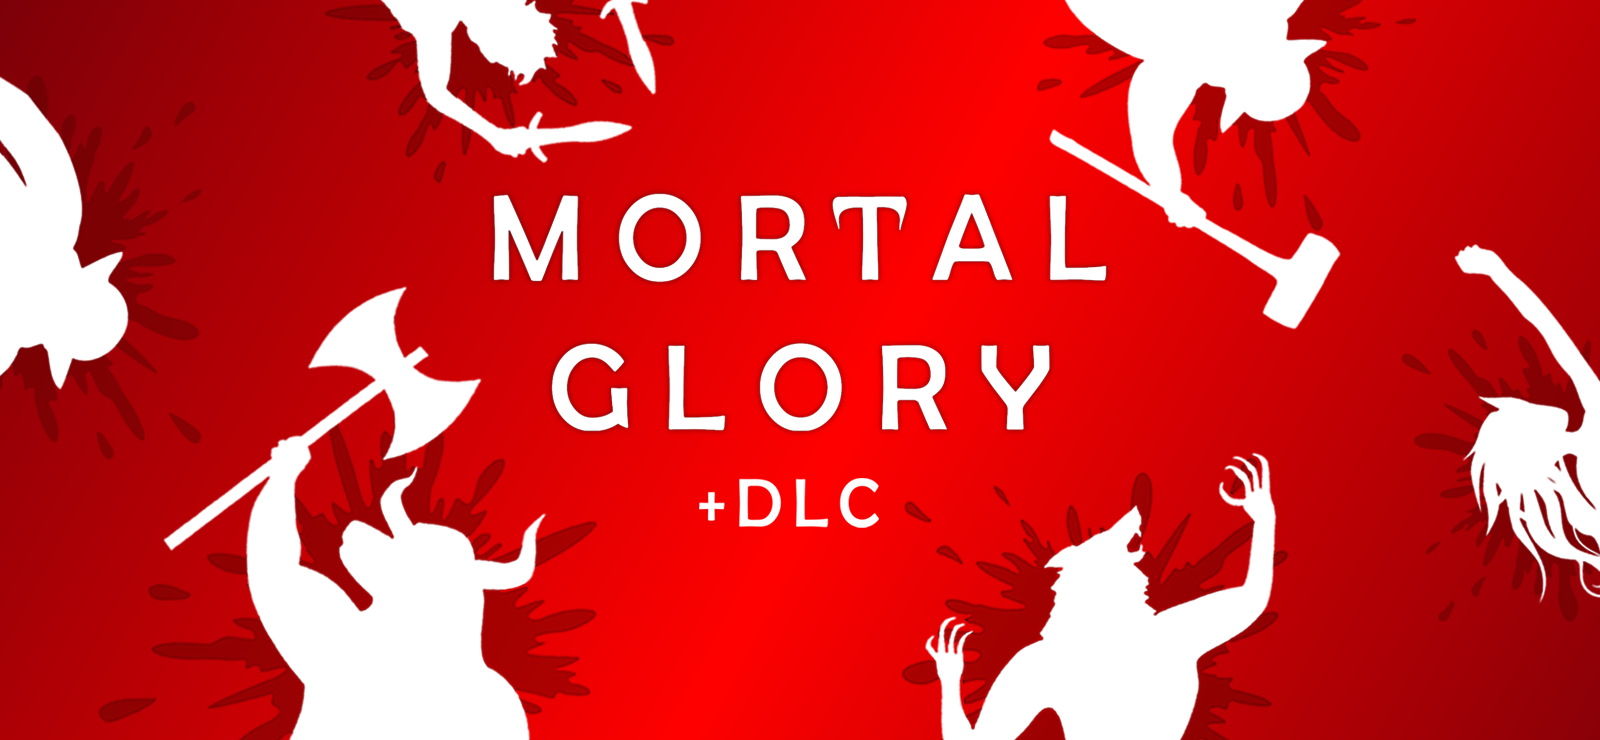 Mortal Glory + DLC